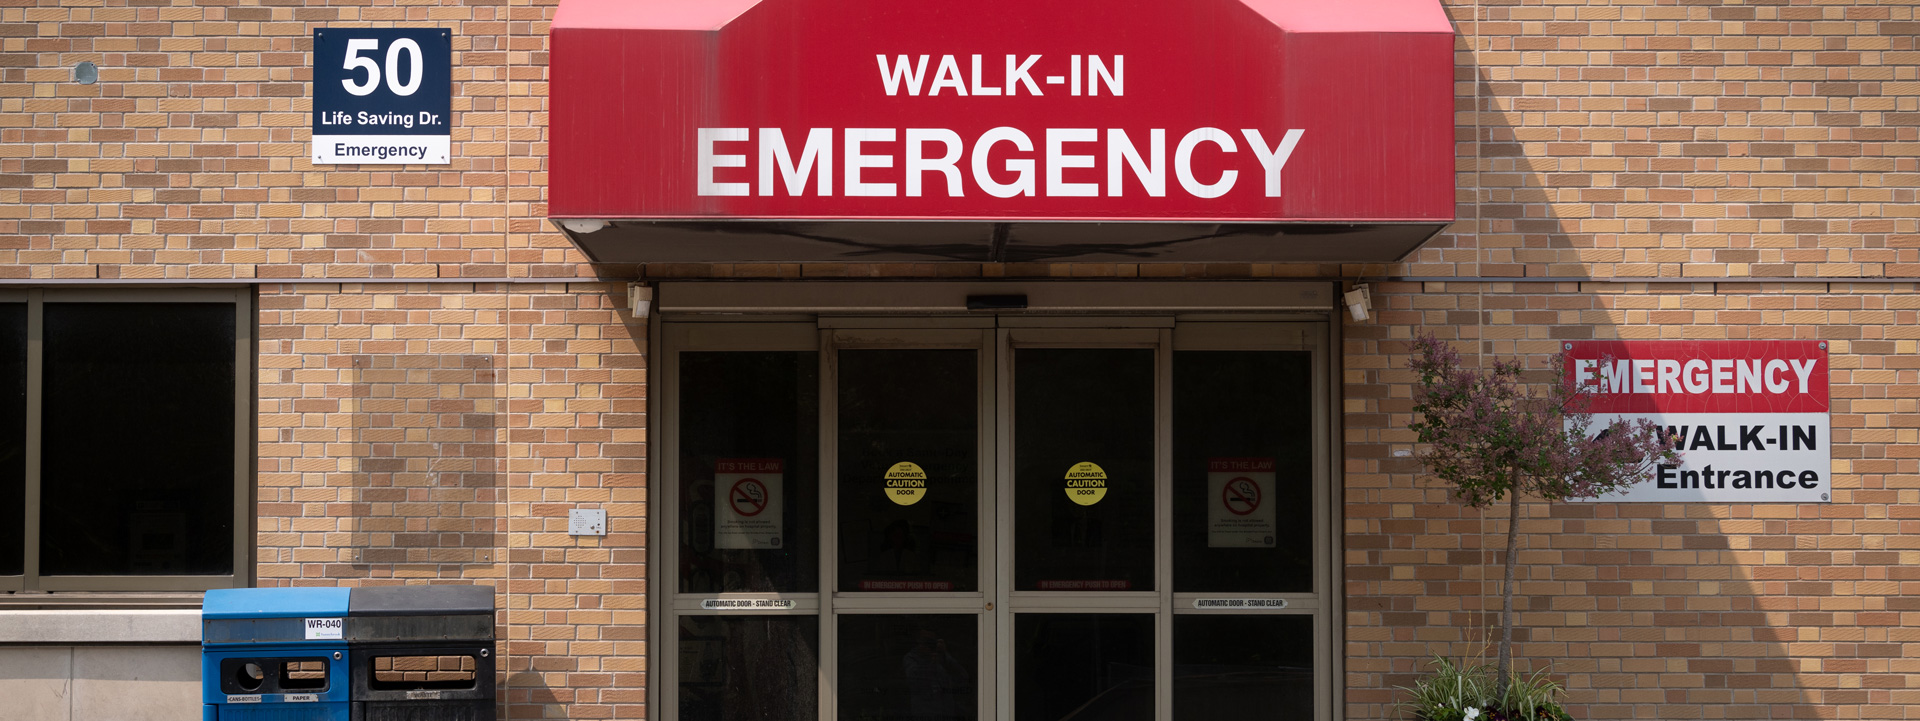 Emergency Department entrance